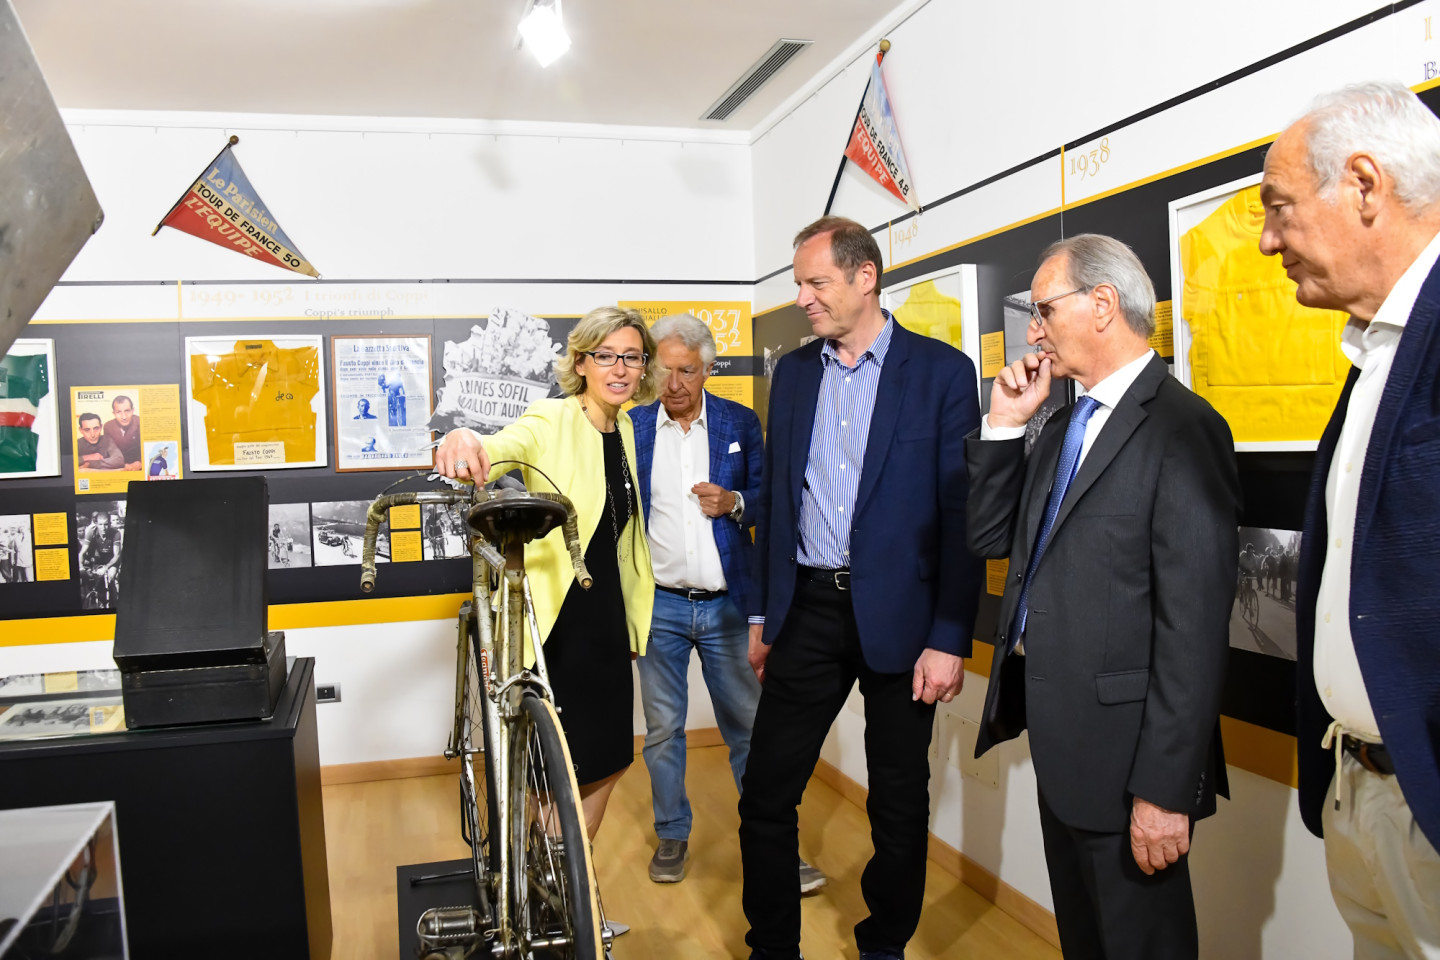 Christian Prudhomme, direttore del Tour de France in visita al Museo